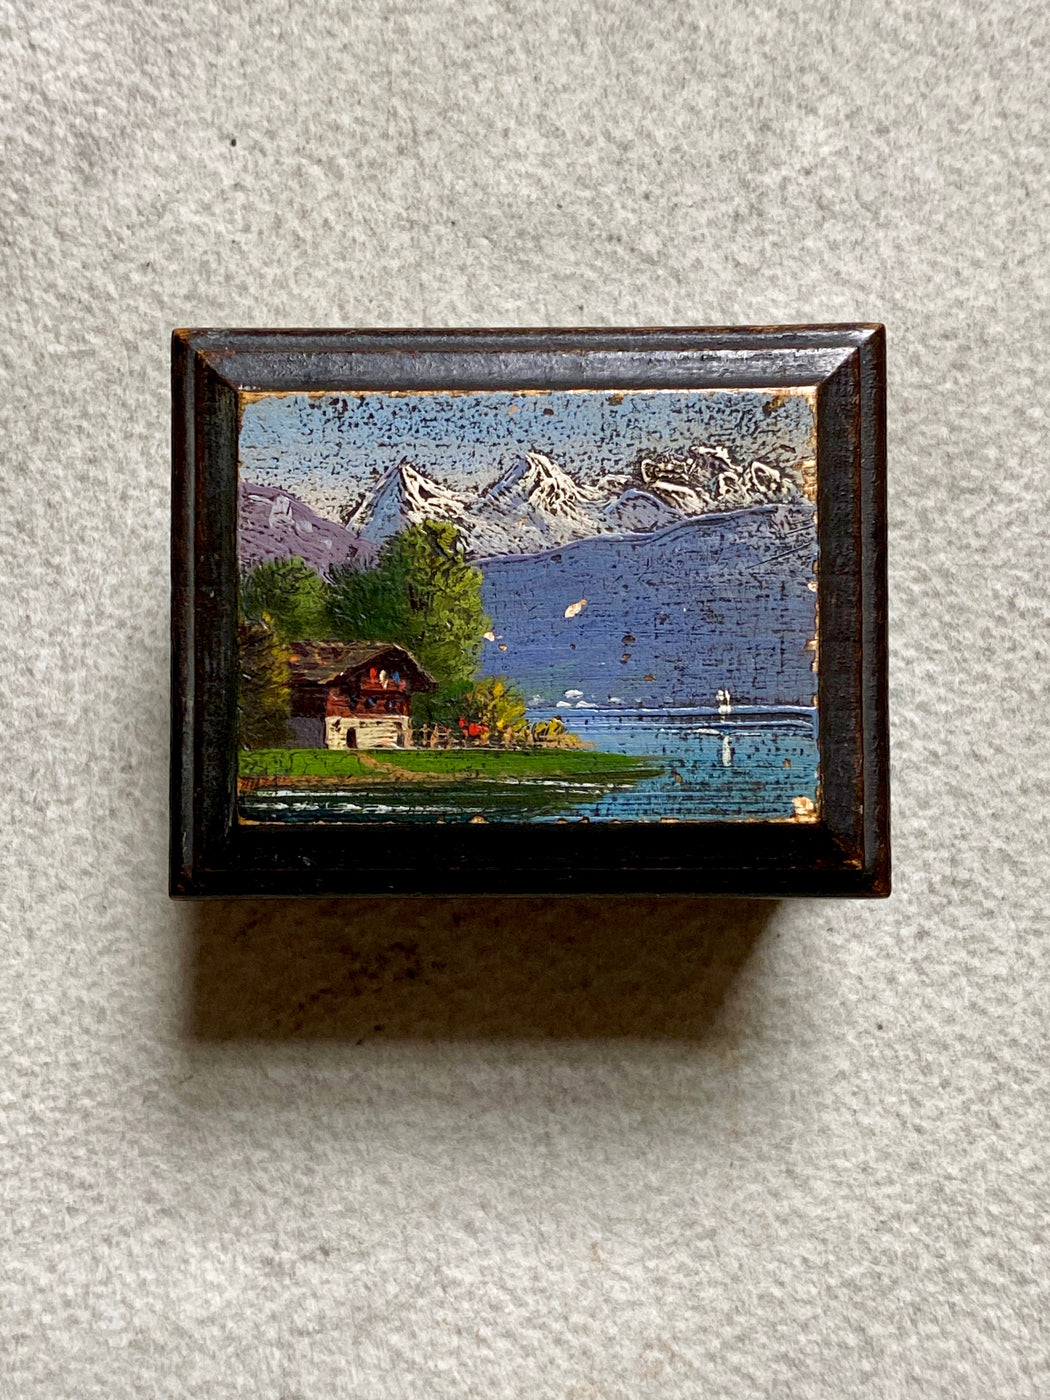 Vintage Souvenir Ware Stamp Box